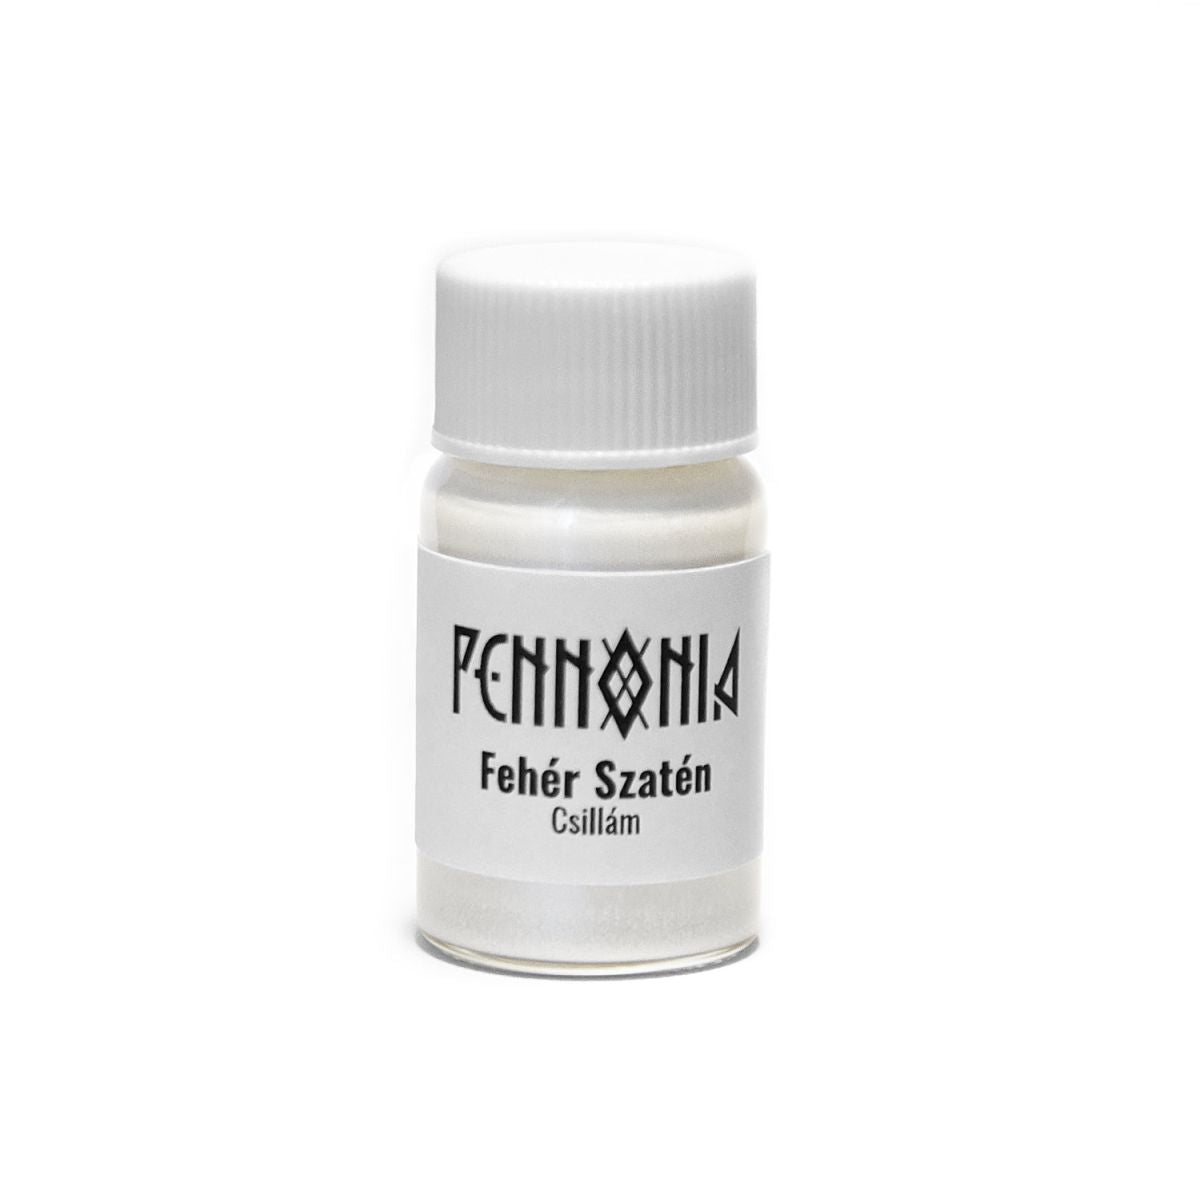 Pennonia shimmer additive - Feher Szaten